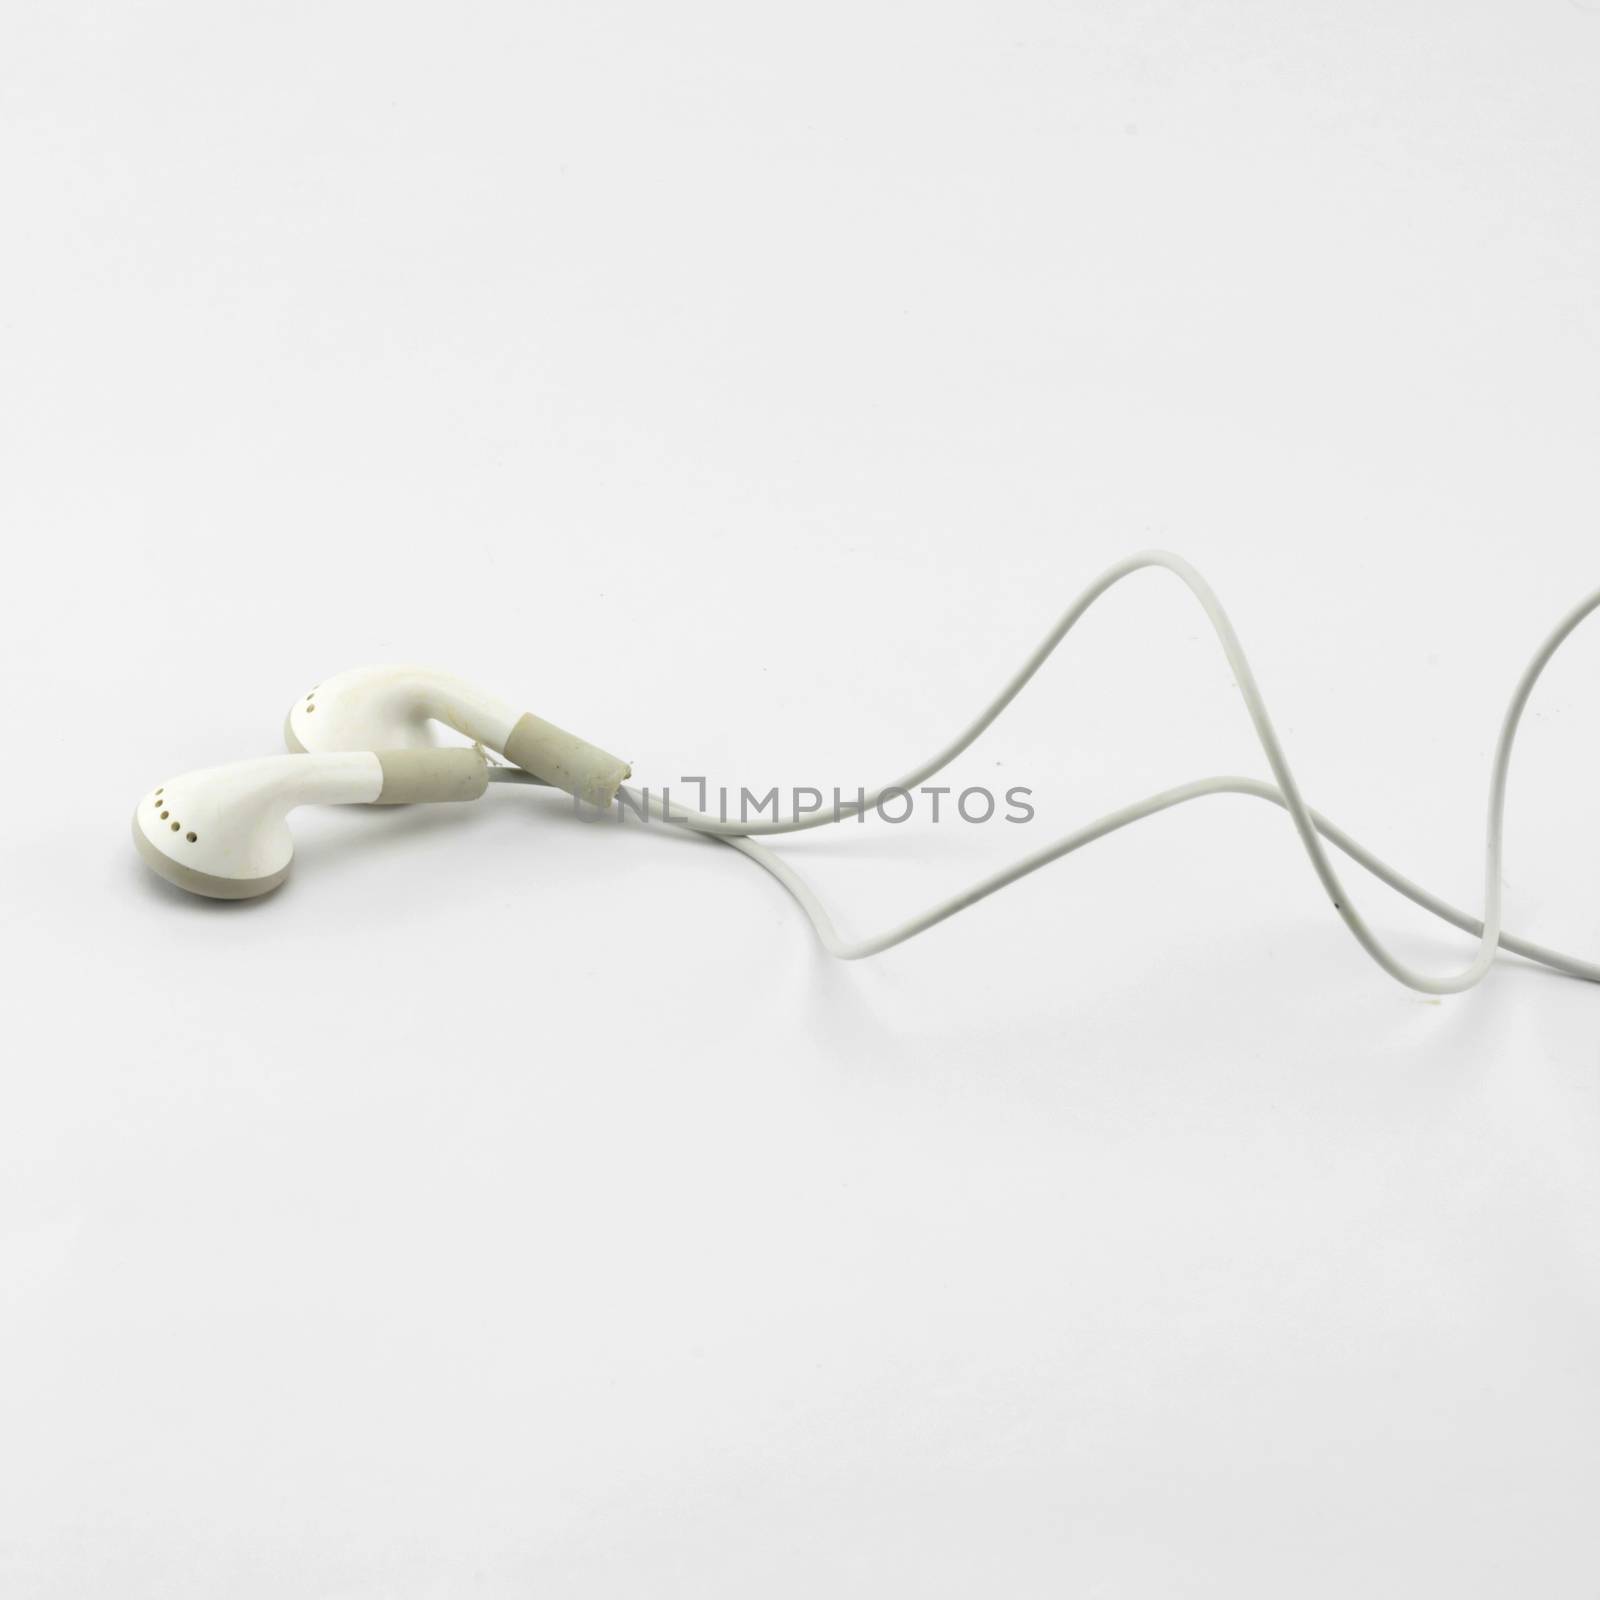 white earphone isolated on white background